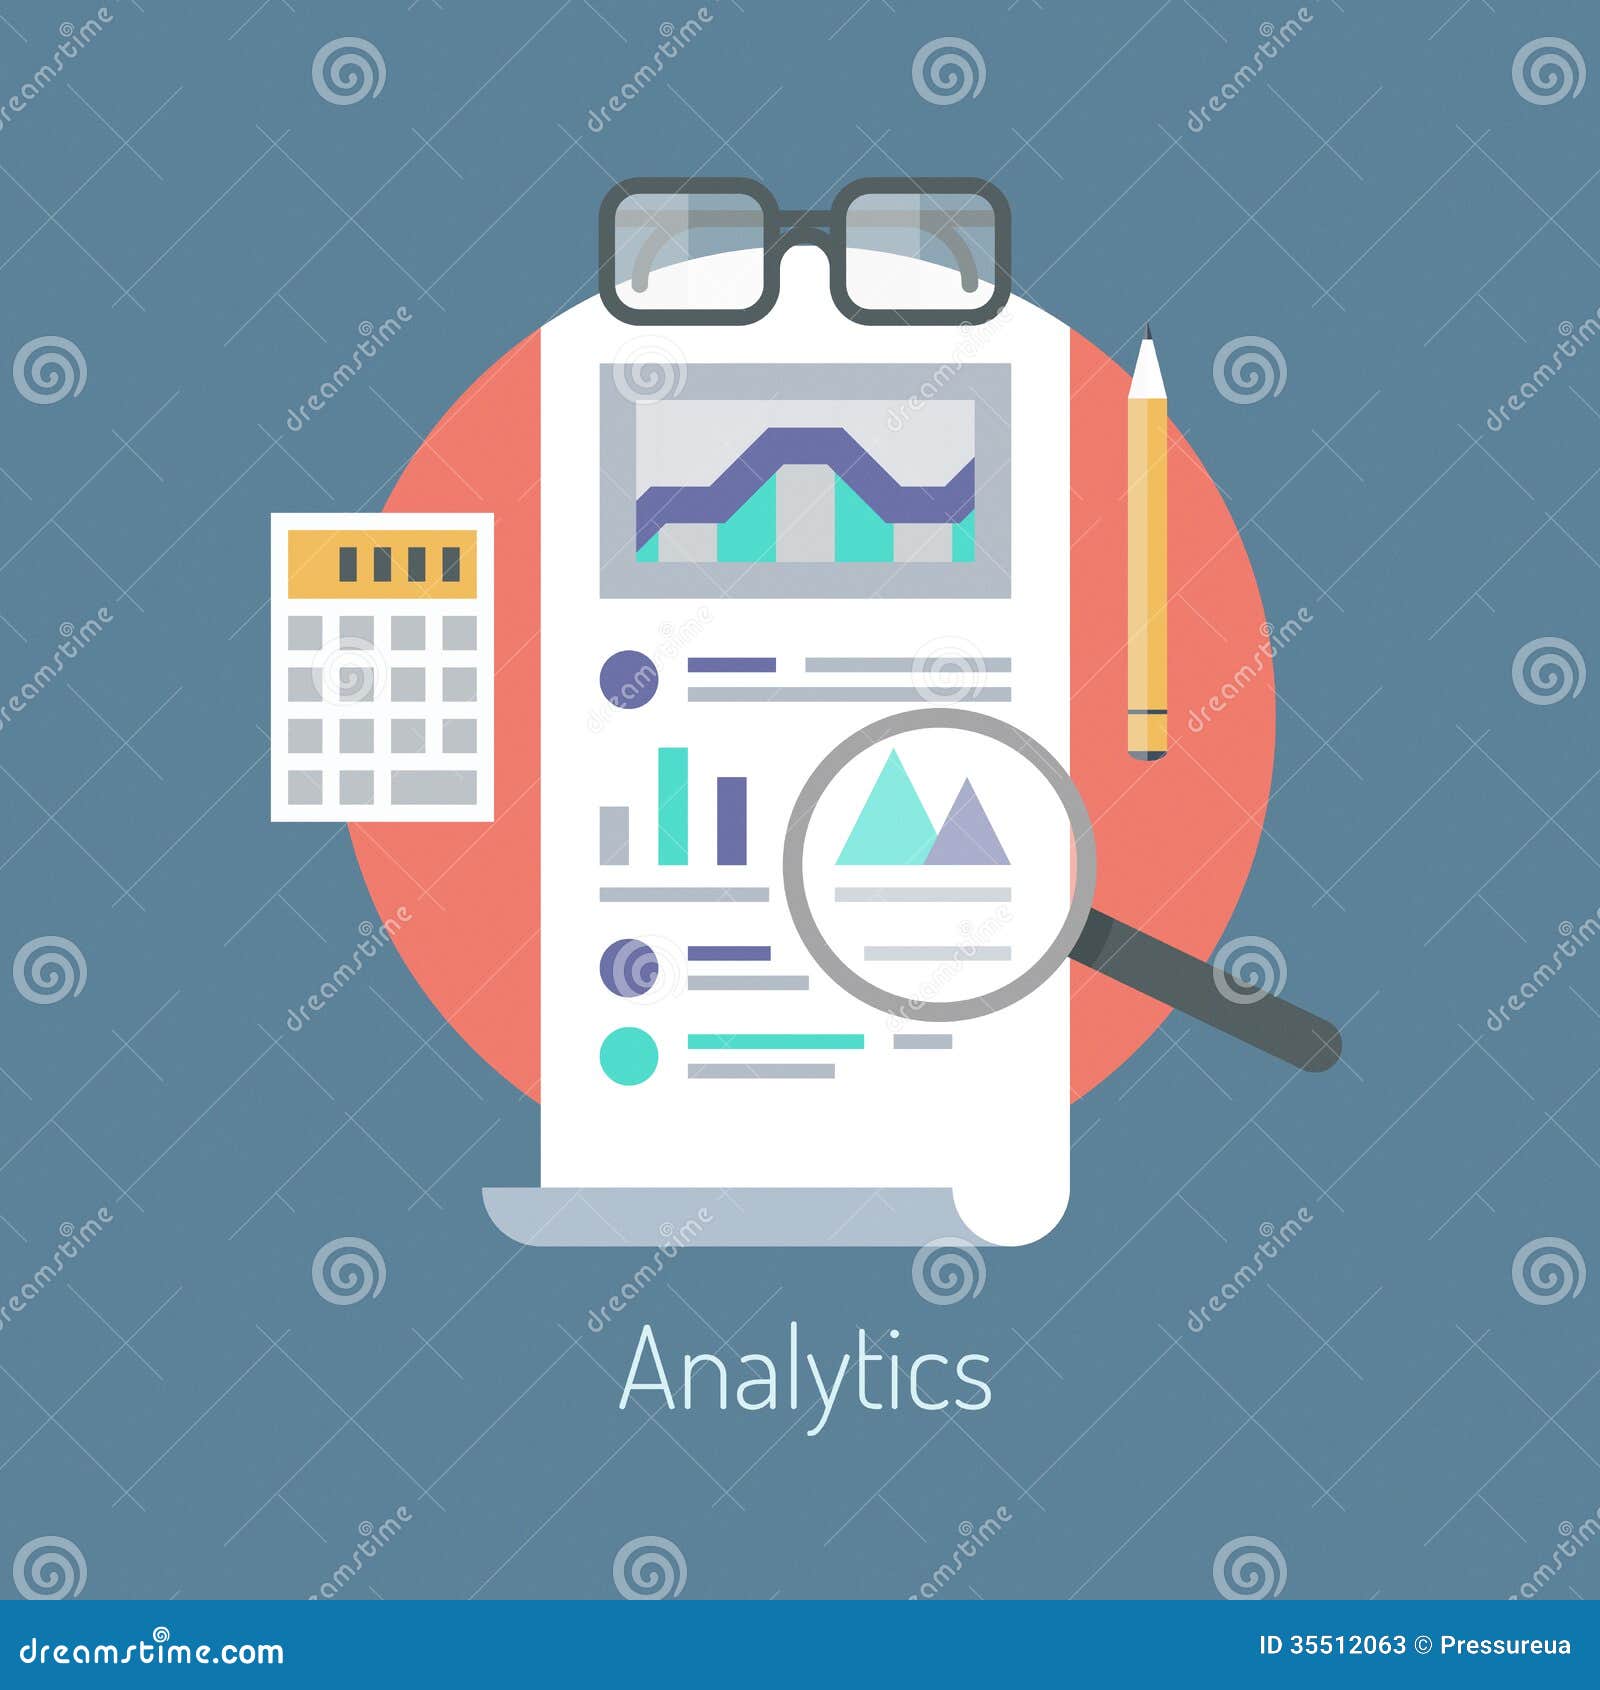 Analytics And Statistics Illustration Stock Photos - Image ...